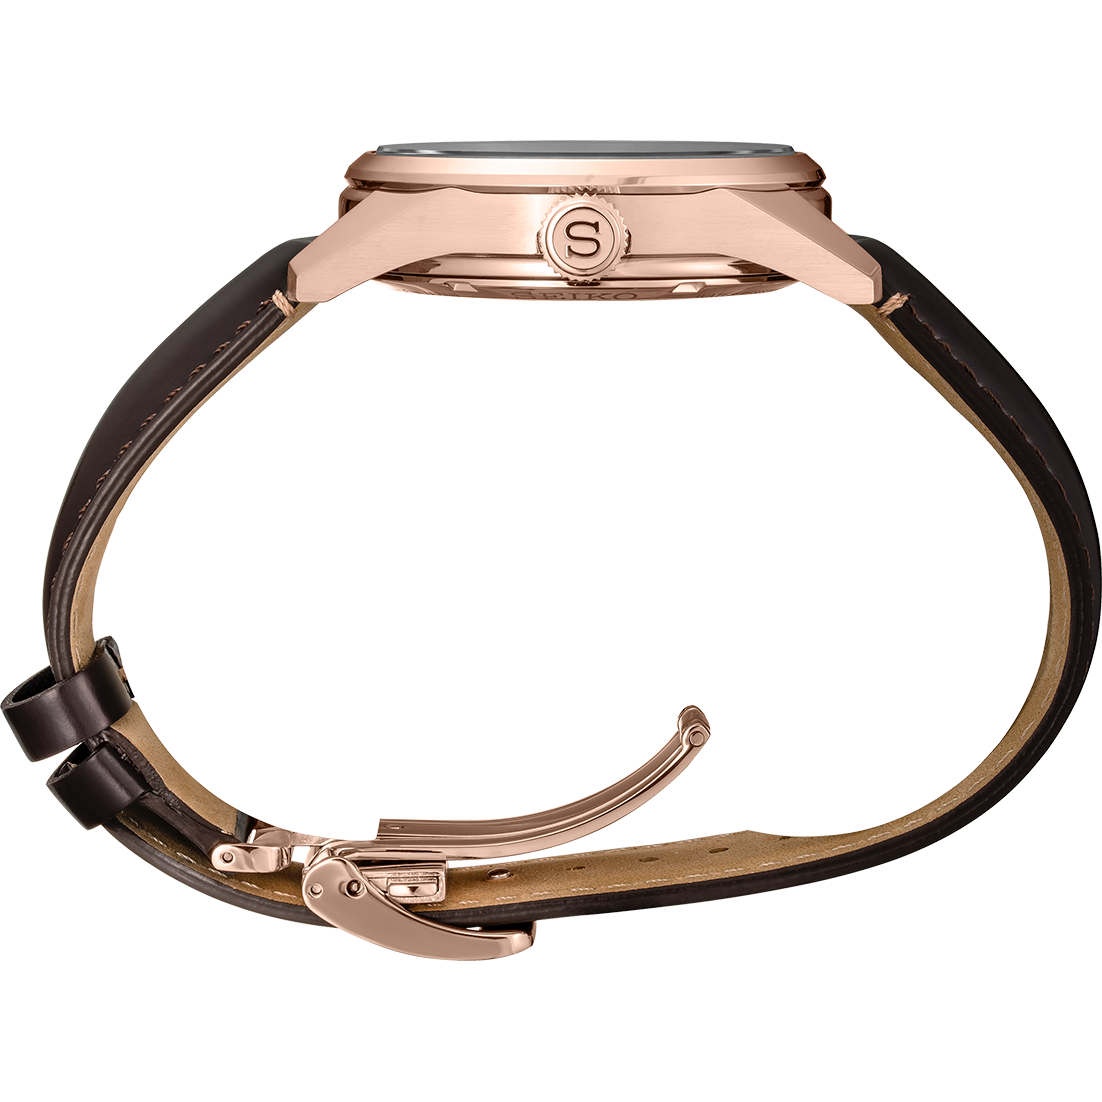 Seiko Presage Sharp Edged Series Rose Gold Brown Strap Automatic Watch SPB170J1